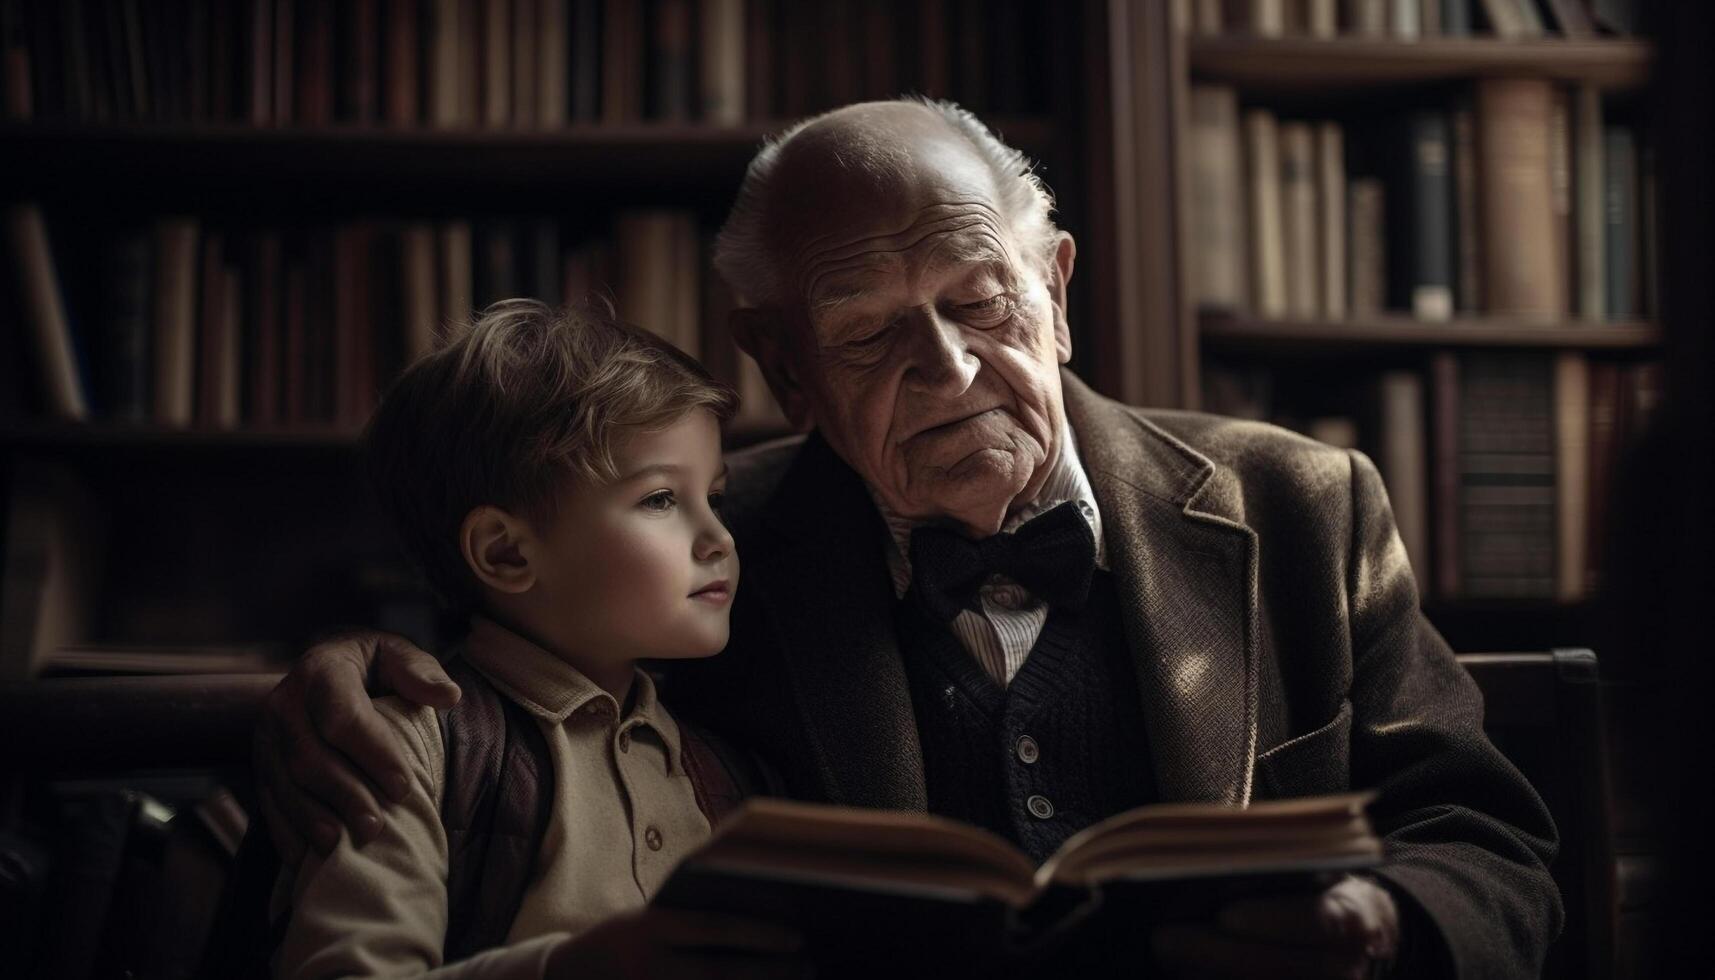 Family bonding through literature Grandfather teaching grandson the wisdom of storytelling photo